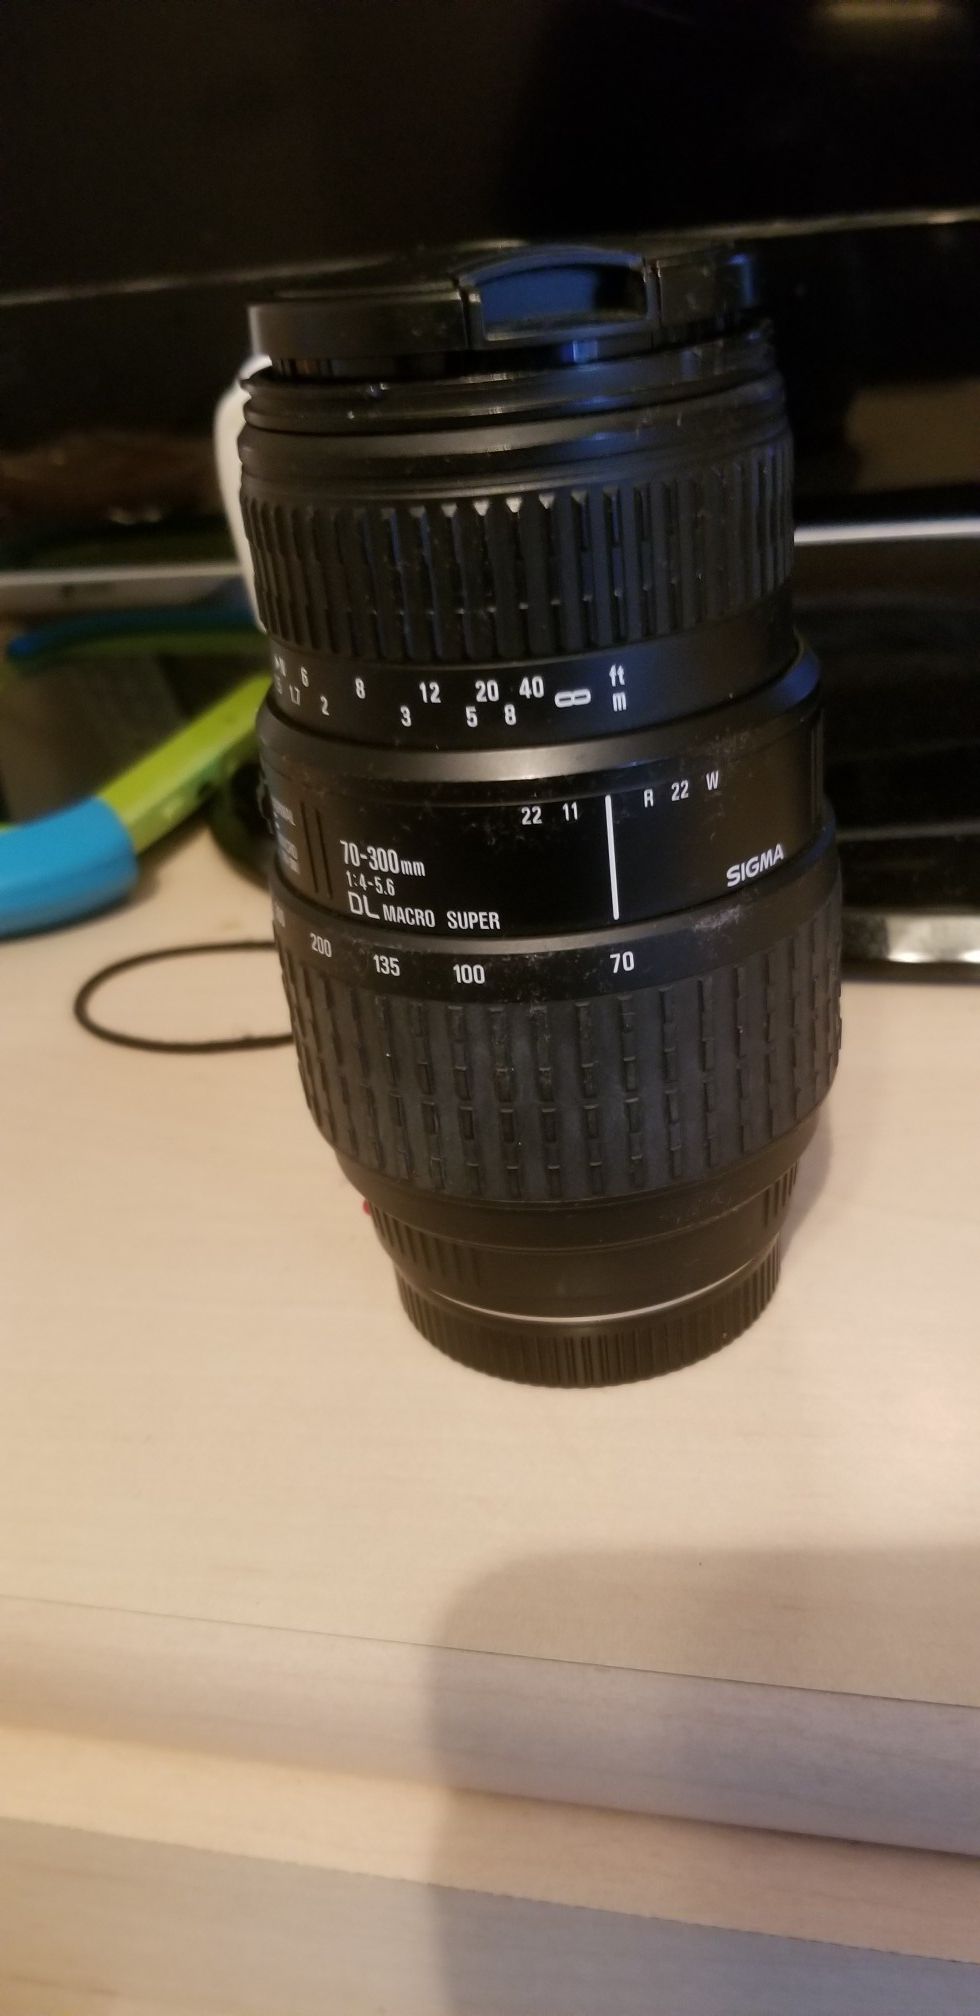 Sigma lens 70-300mm